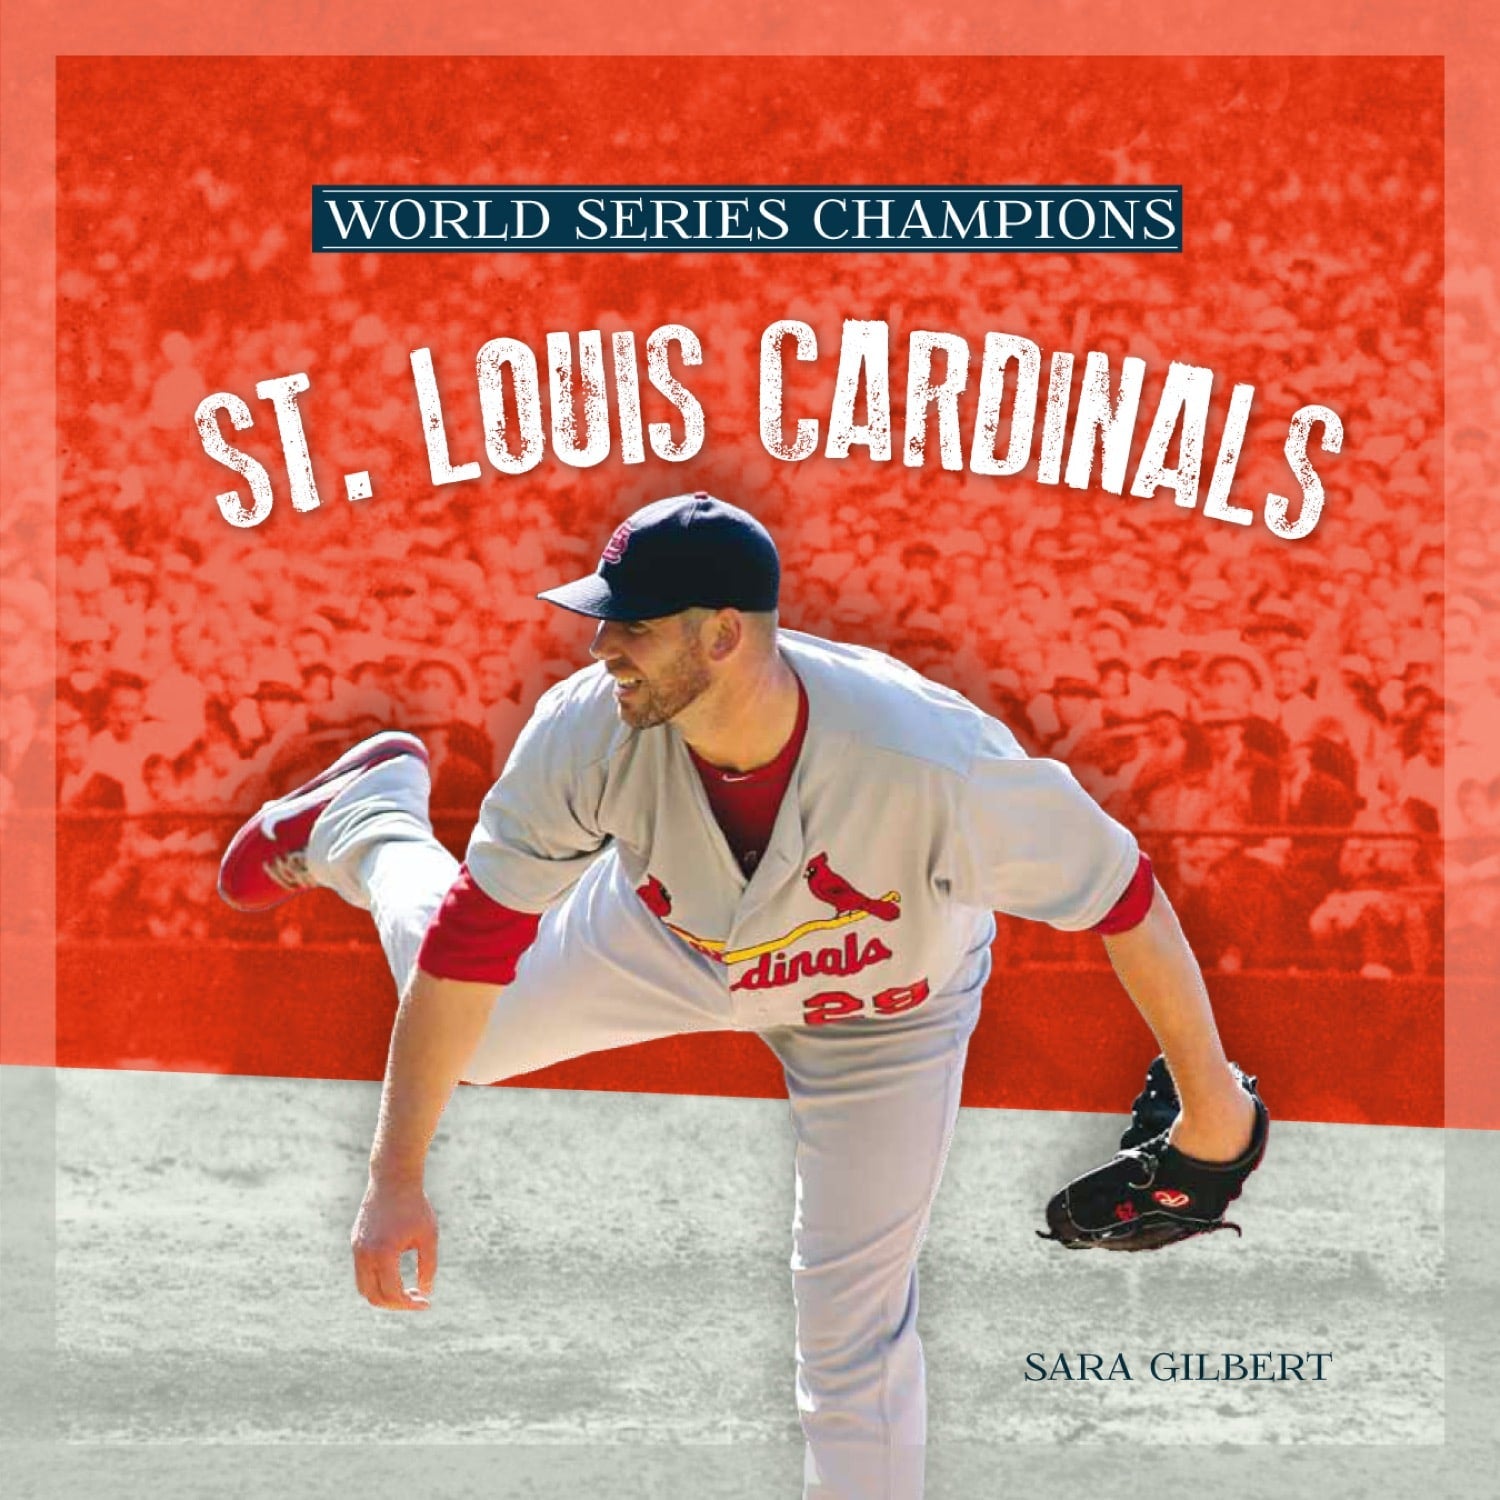 cardinals world champions